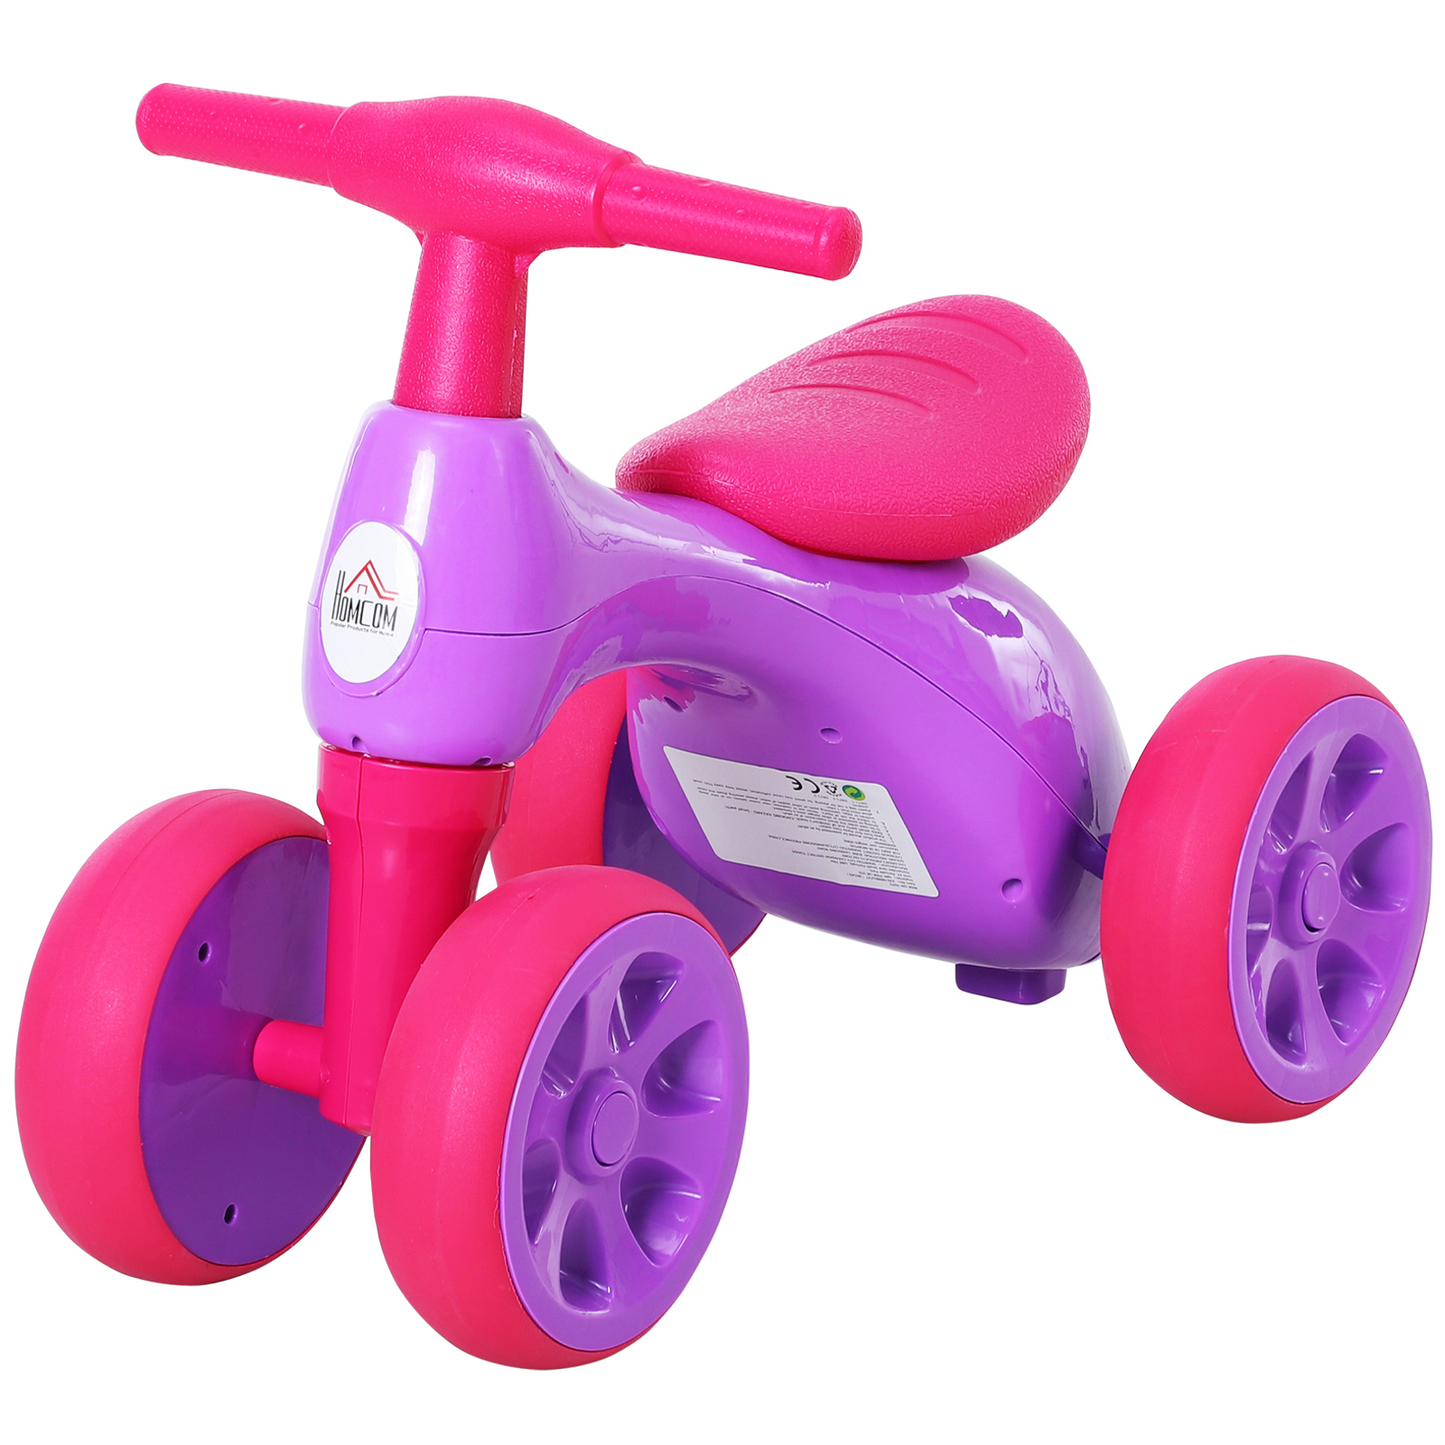 HOMCOM Baby Balance Bike Toddler Training Walker Smooth Rubber Wheels Ride on Toy Storage Bin Gift for Boys Girls Violet Fuchsia